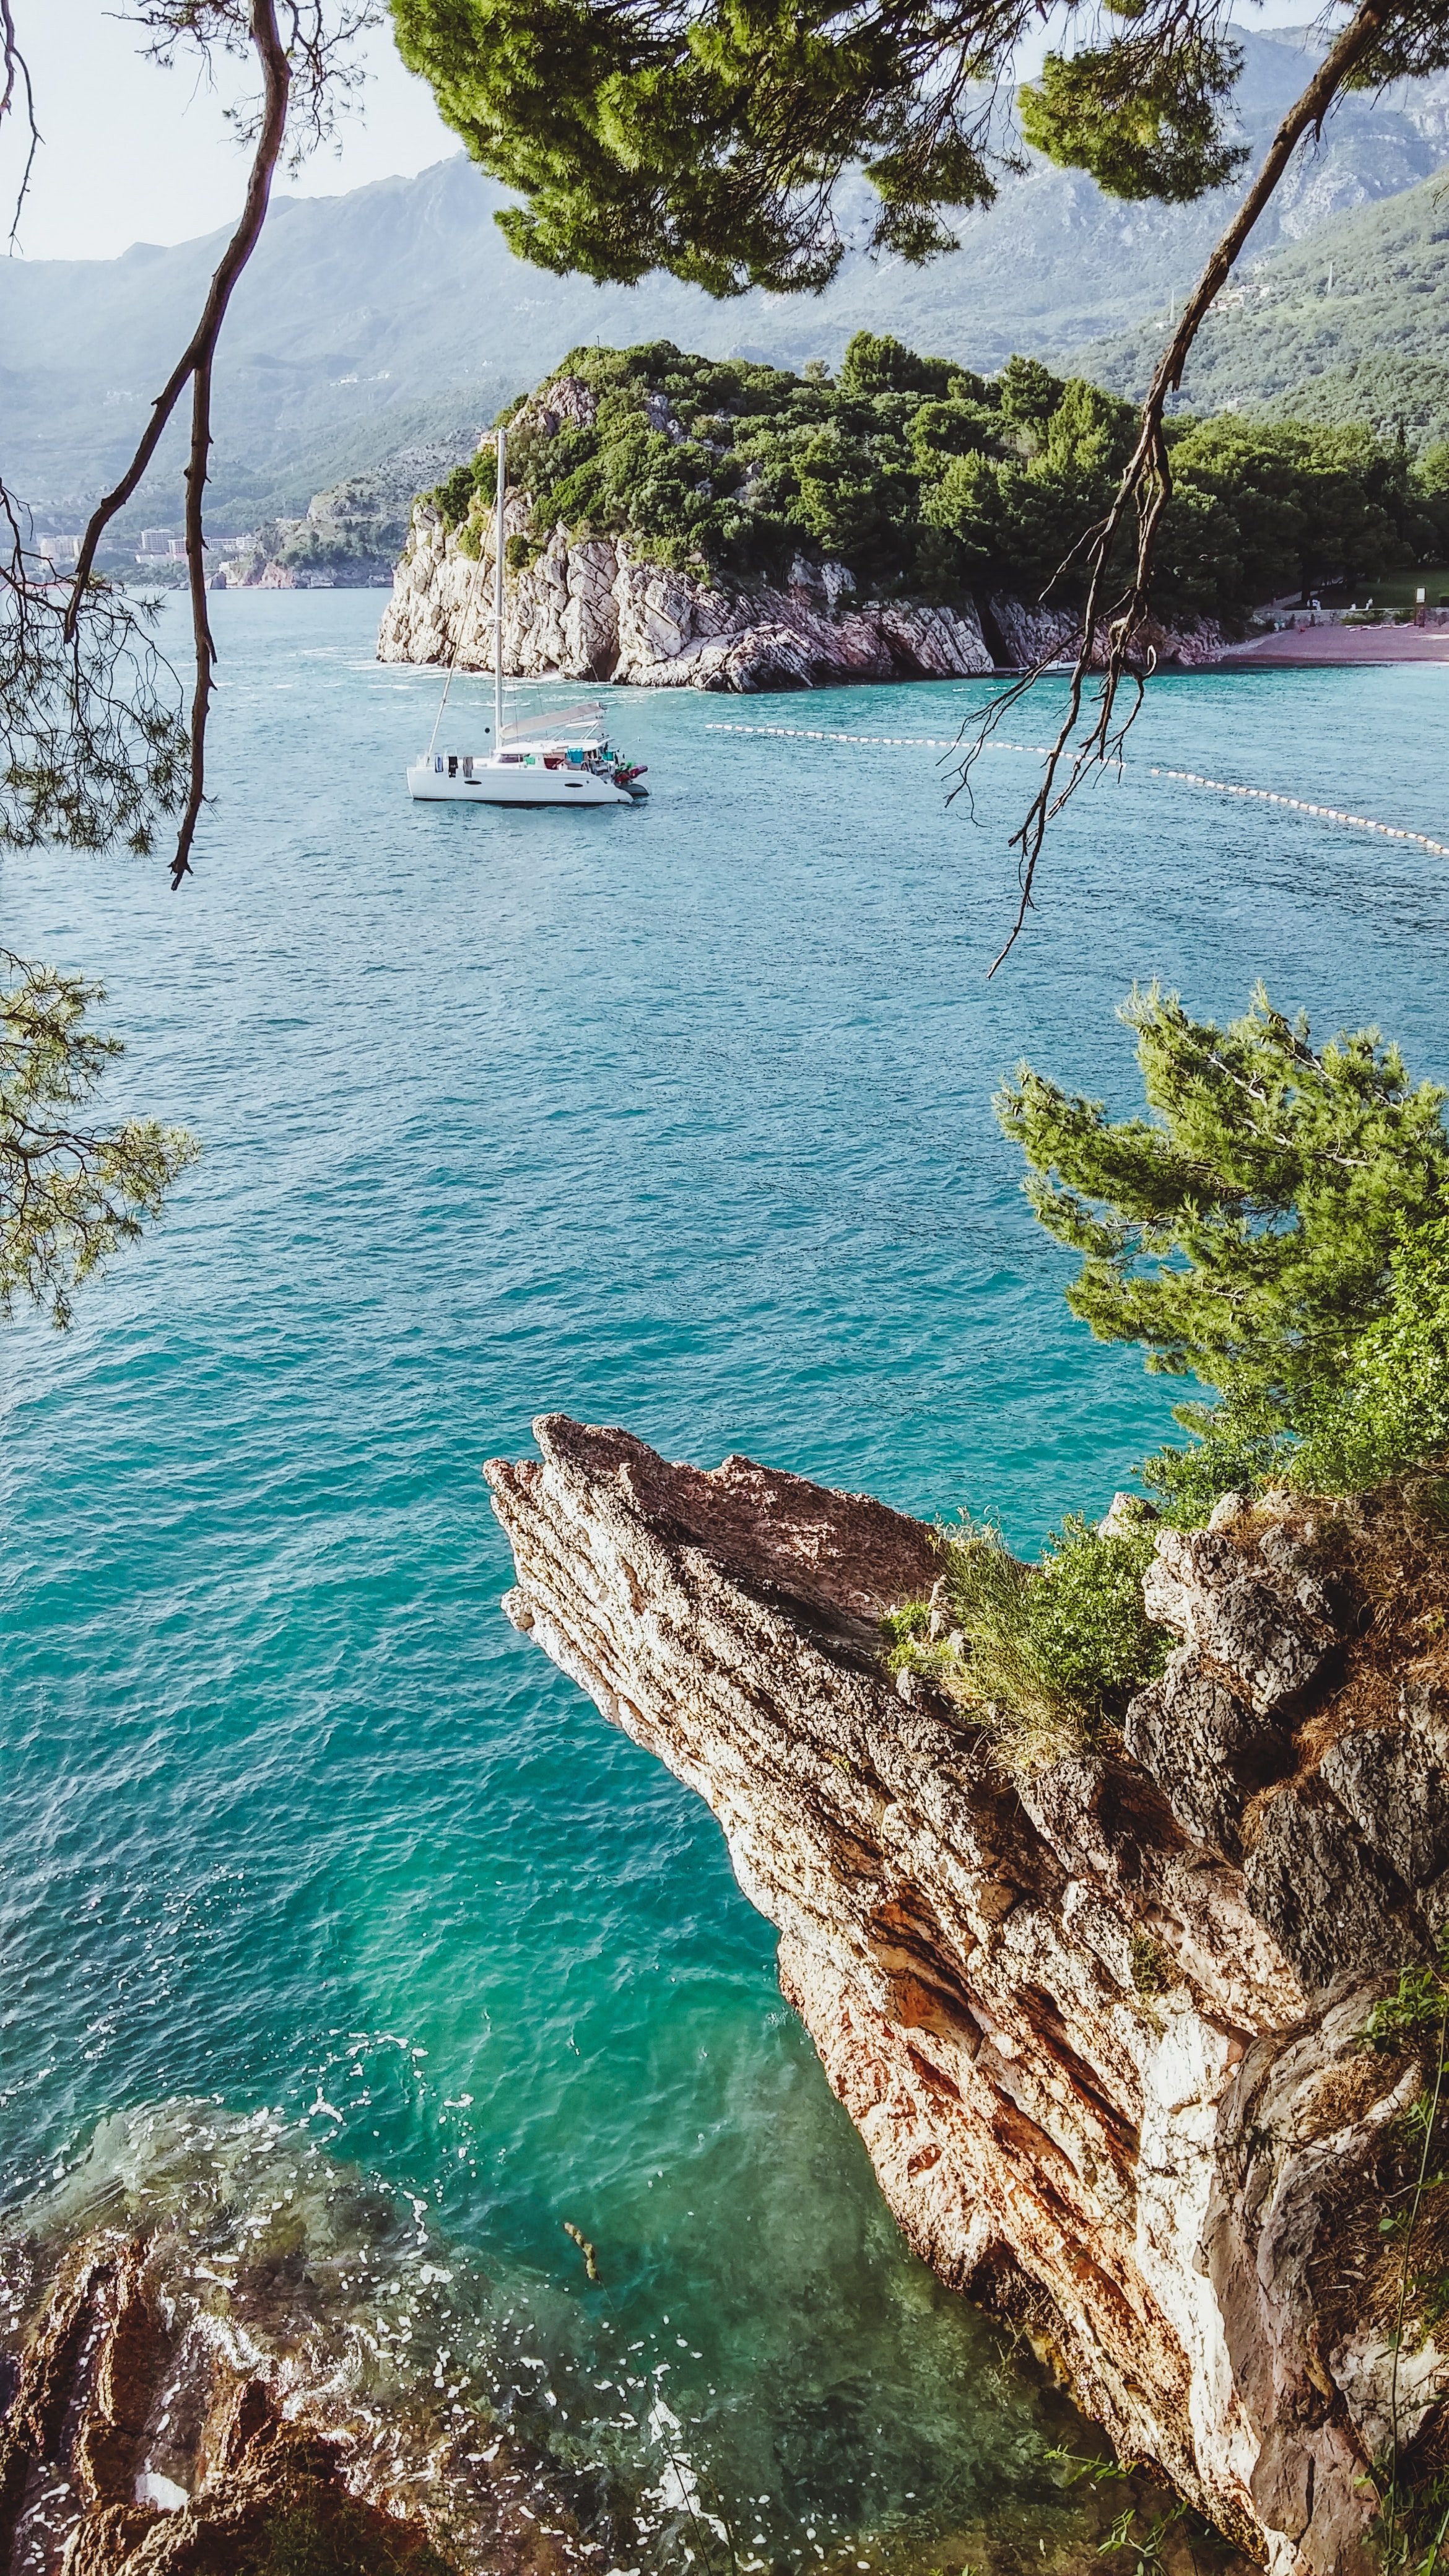 Mediterranean rocky coastline with view of boat